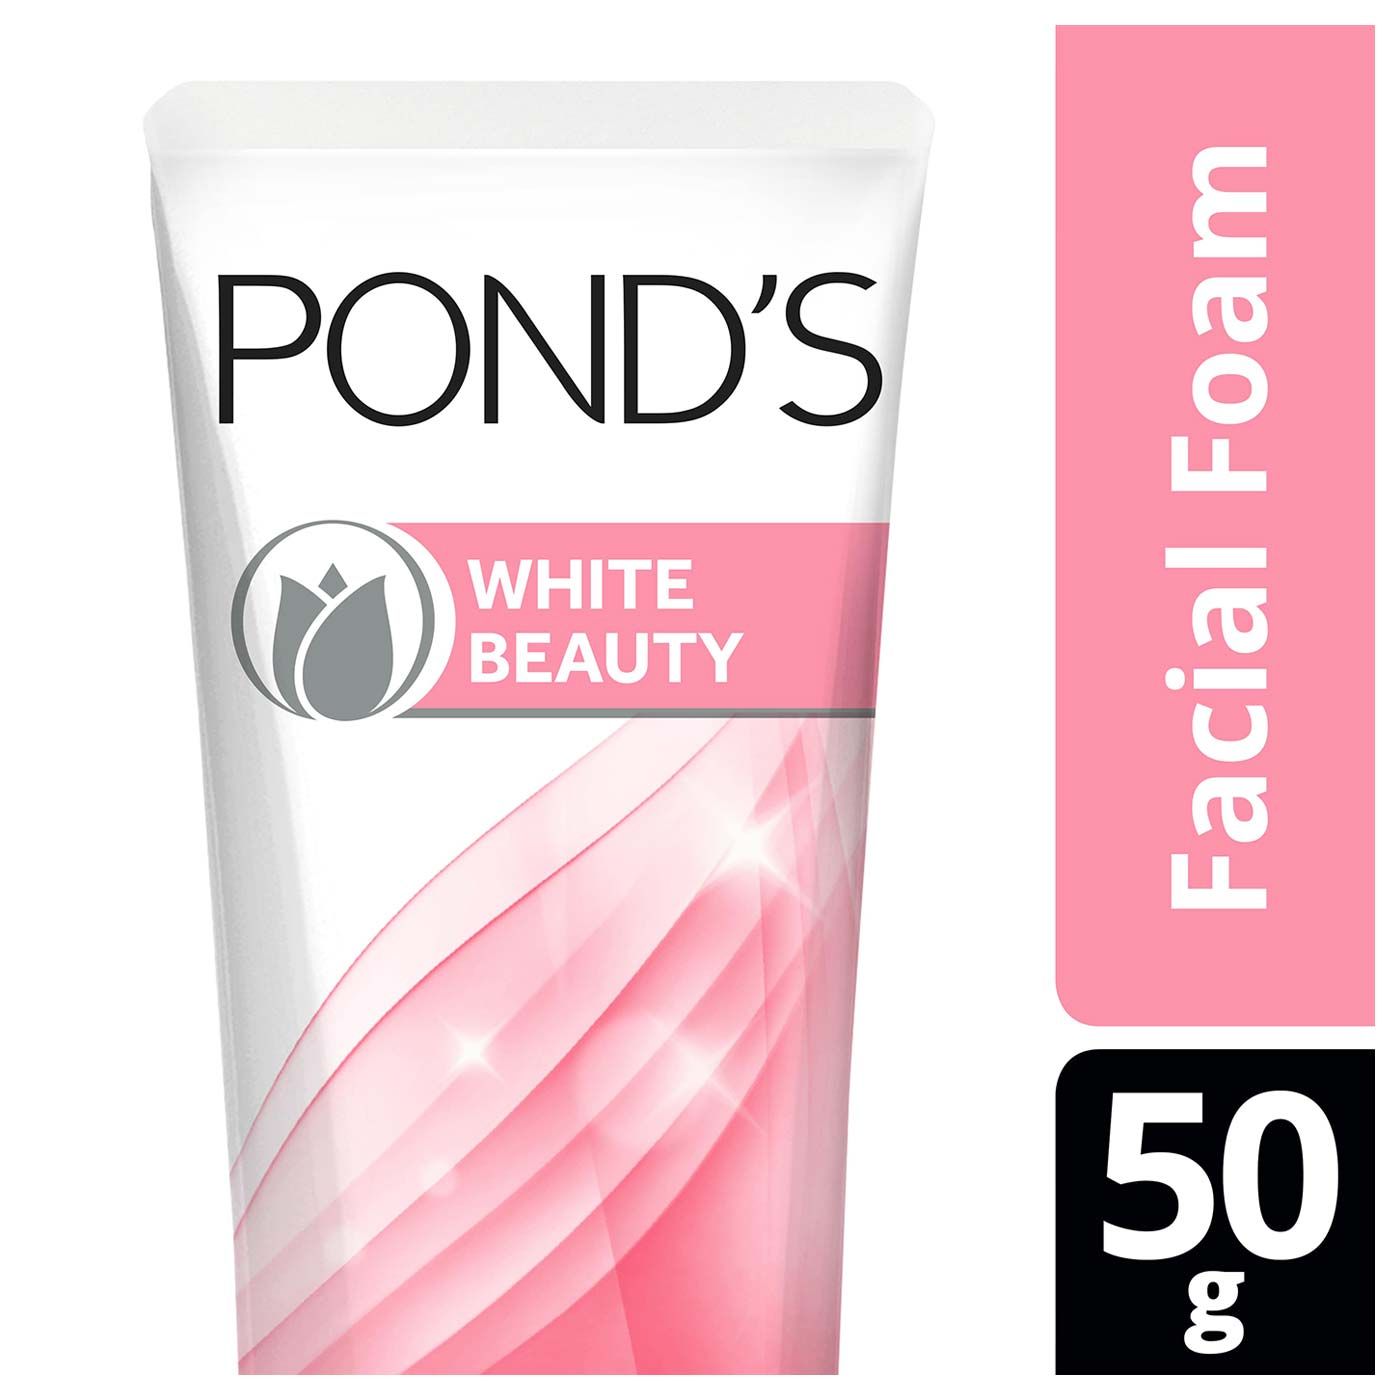 Ponds White Beauty Facial Foam